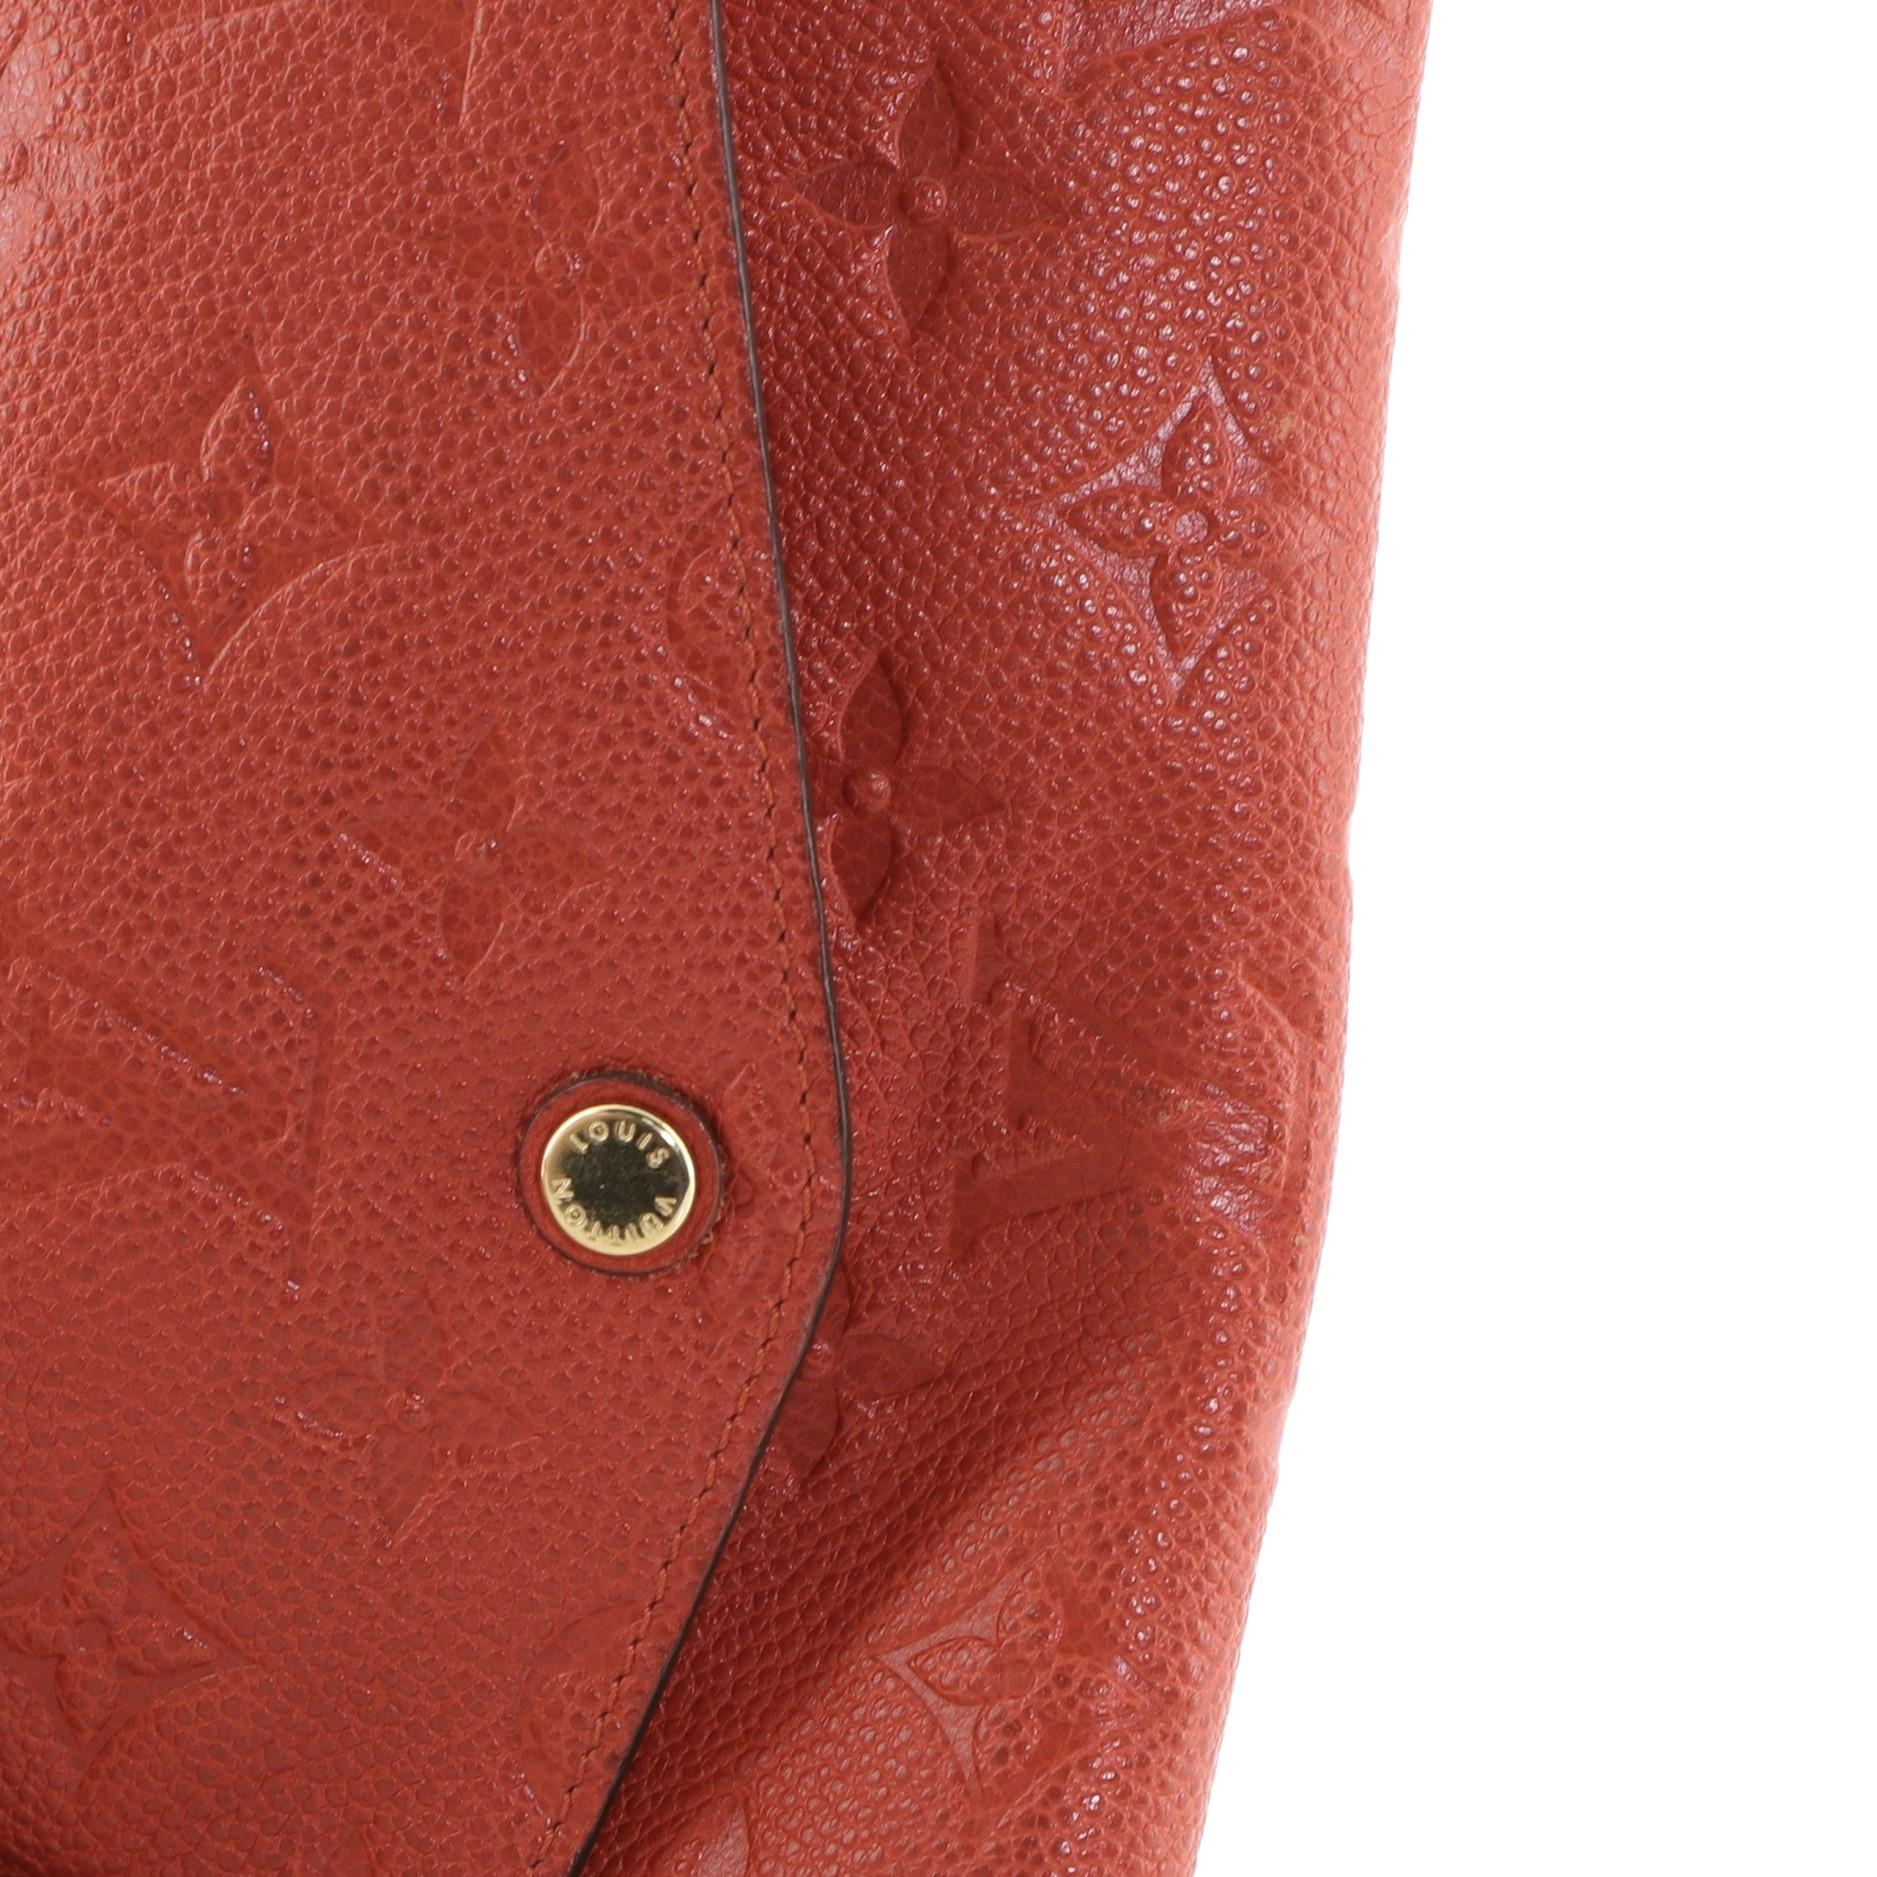 Women's Louis Vuitton Sarah Wallet NM Monogram Empreinte Leather